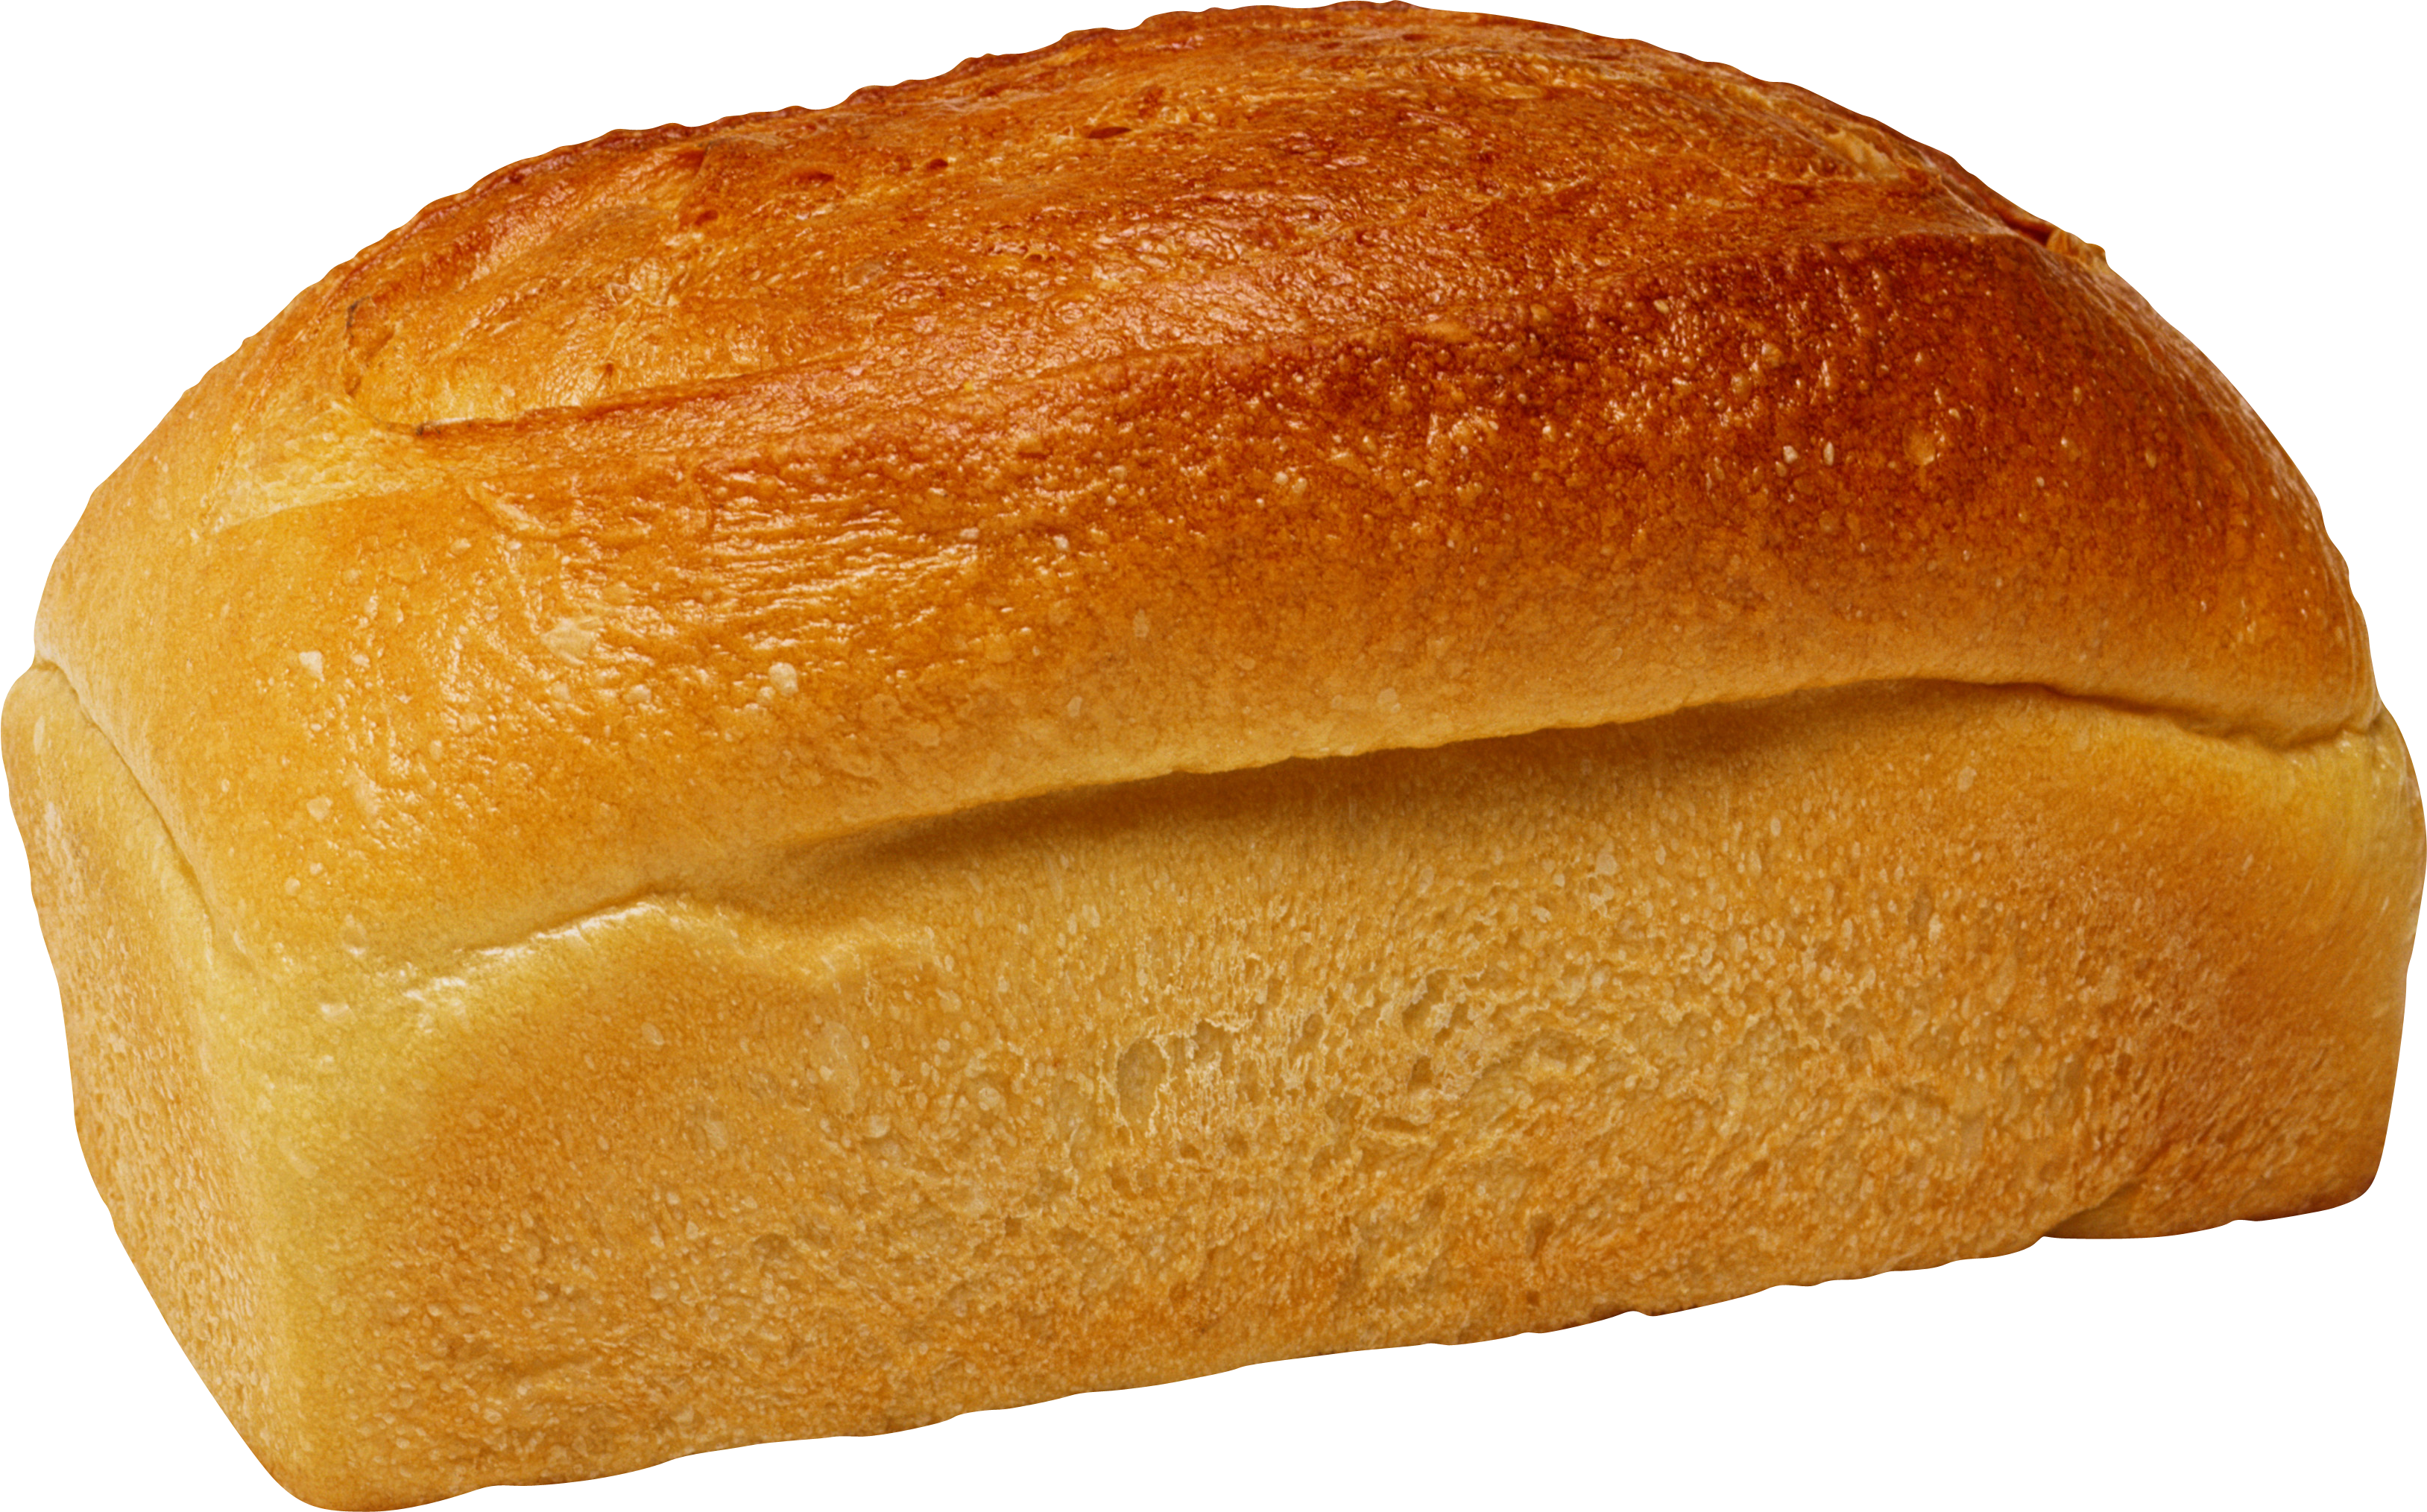 Milk Bread